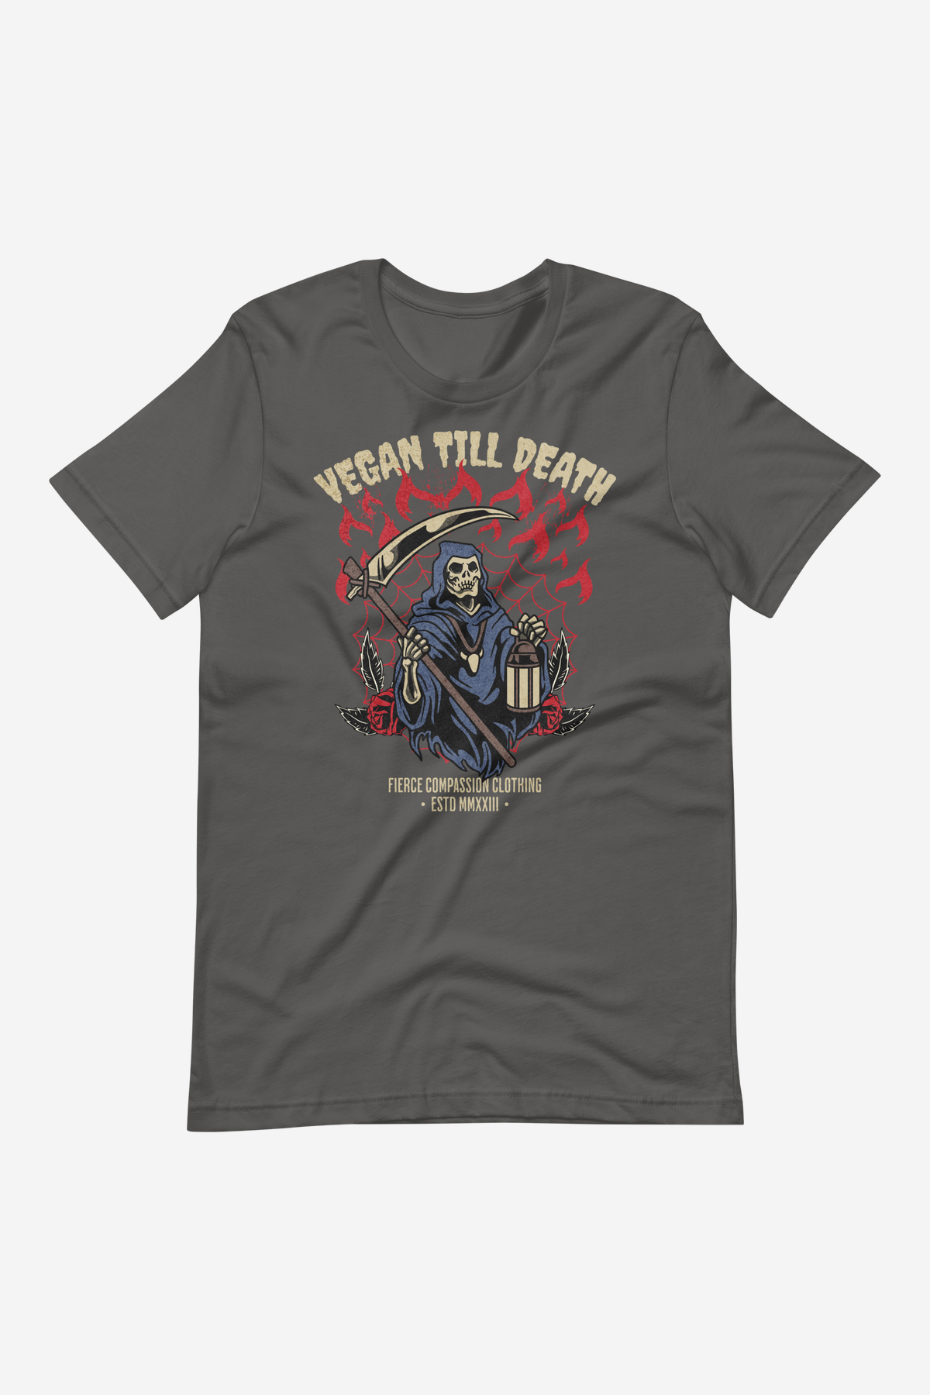 Vegan Till Death Unisex t-shirt